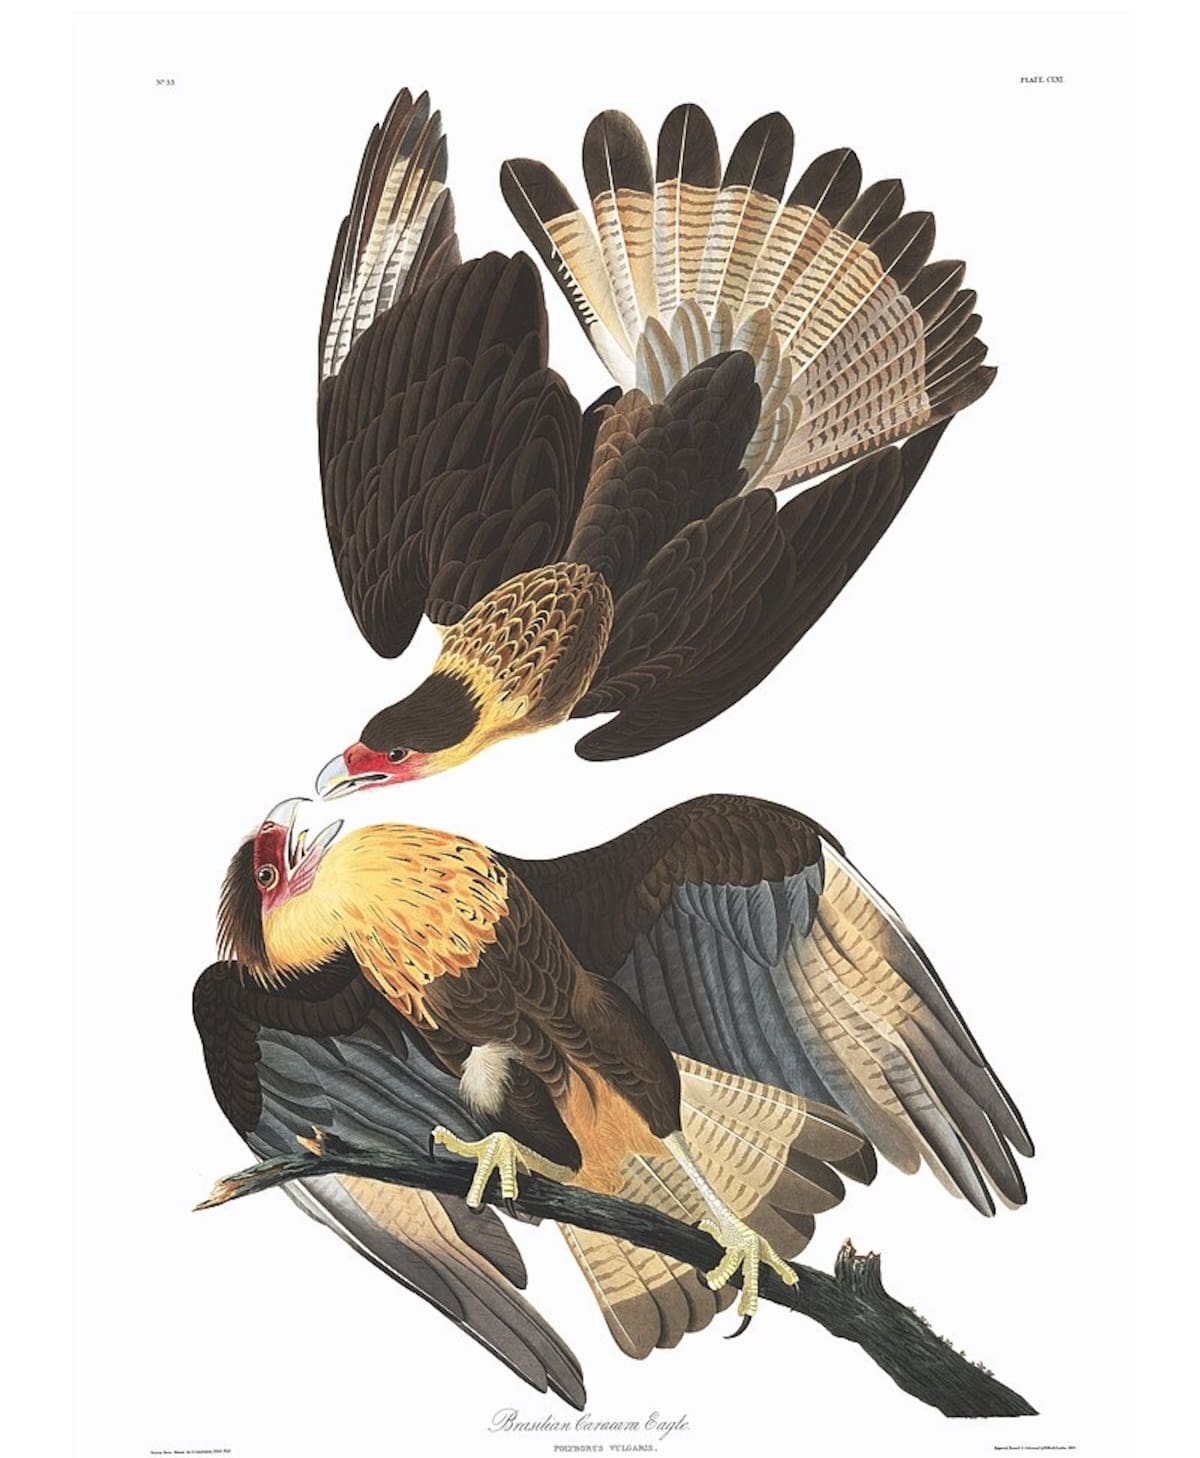 Imagen ilustrativa del Quebrantahuesos de la Isla Guadalupe.

Foto: John James Audubon - Birds of America, Dominio público, https://commons.wikimedia.org/w/index.php?curid=900705